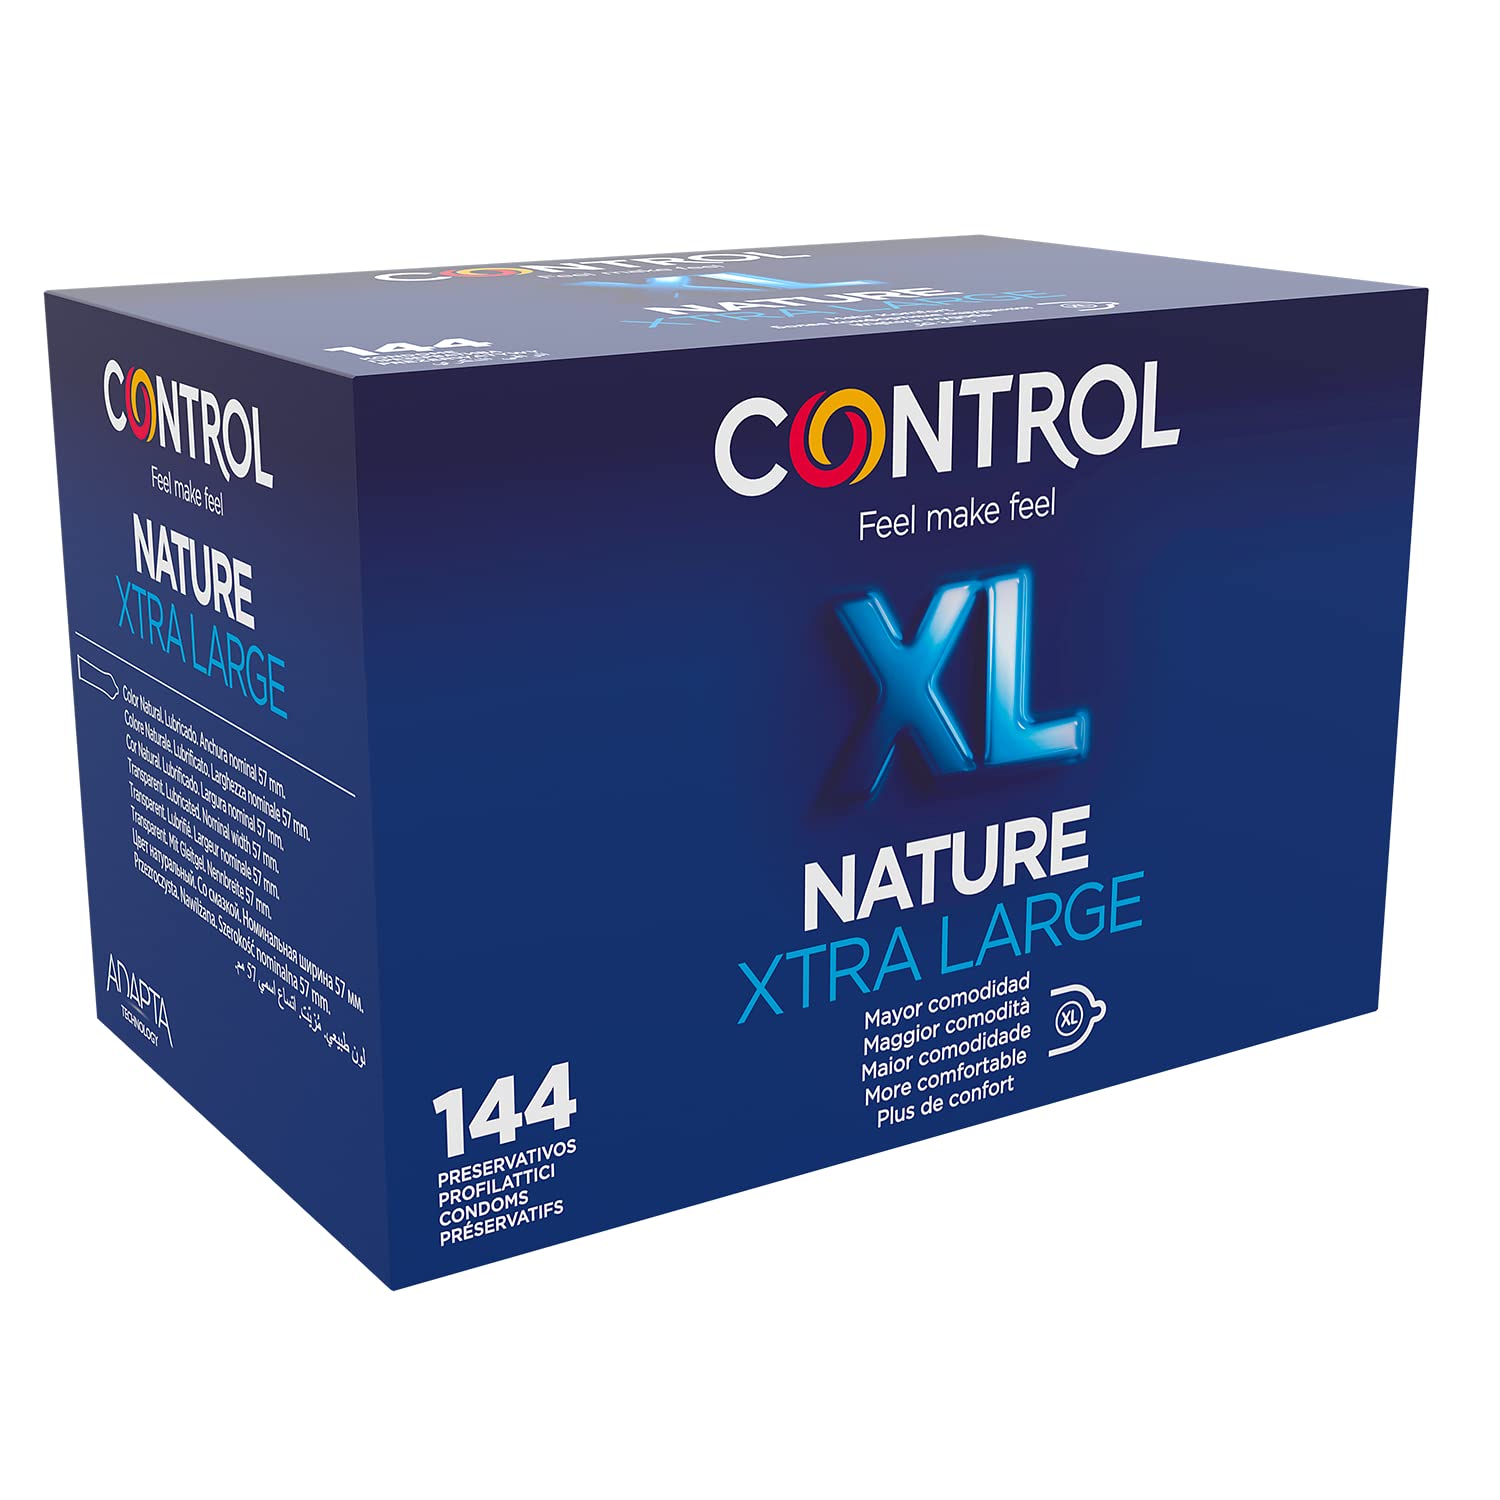 CONTROL NATURE XTRA LARGE Elastische Kondome Größe XL aus Naturlatex - 144 Stück